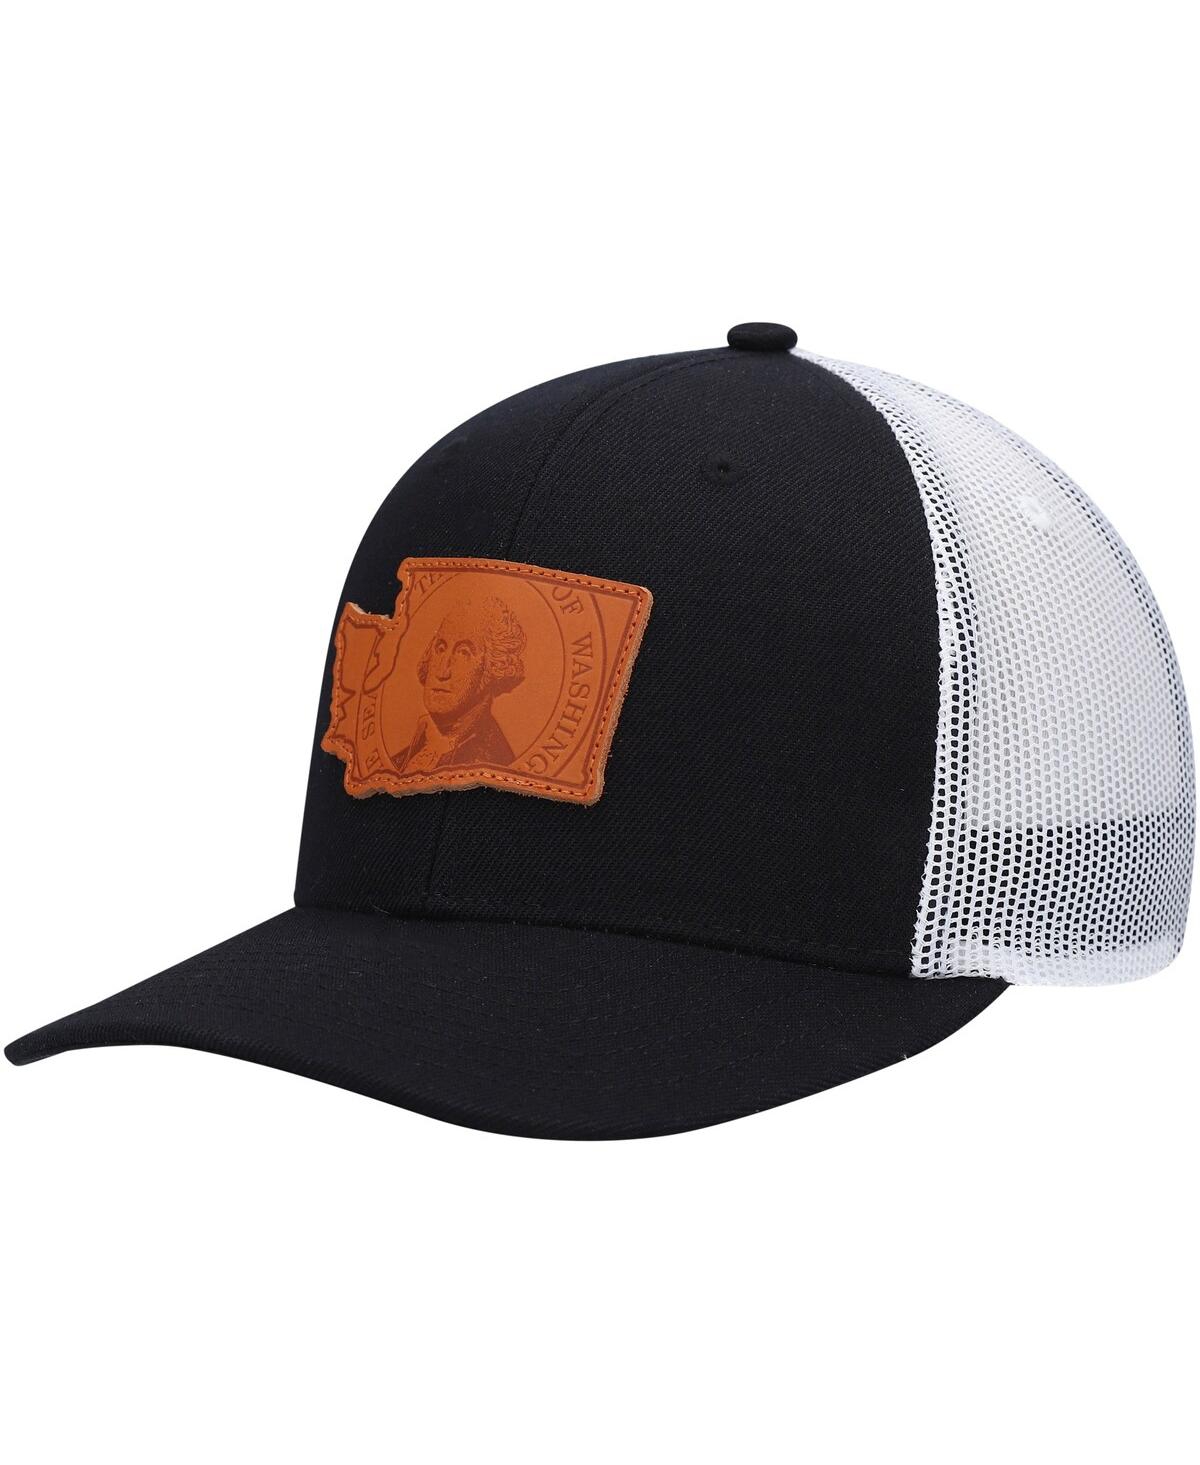 Local Crowns Men's  Black Washington Leather State Applique Trucker Snapback Hat